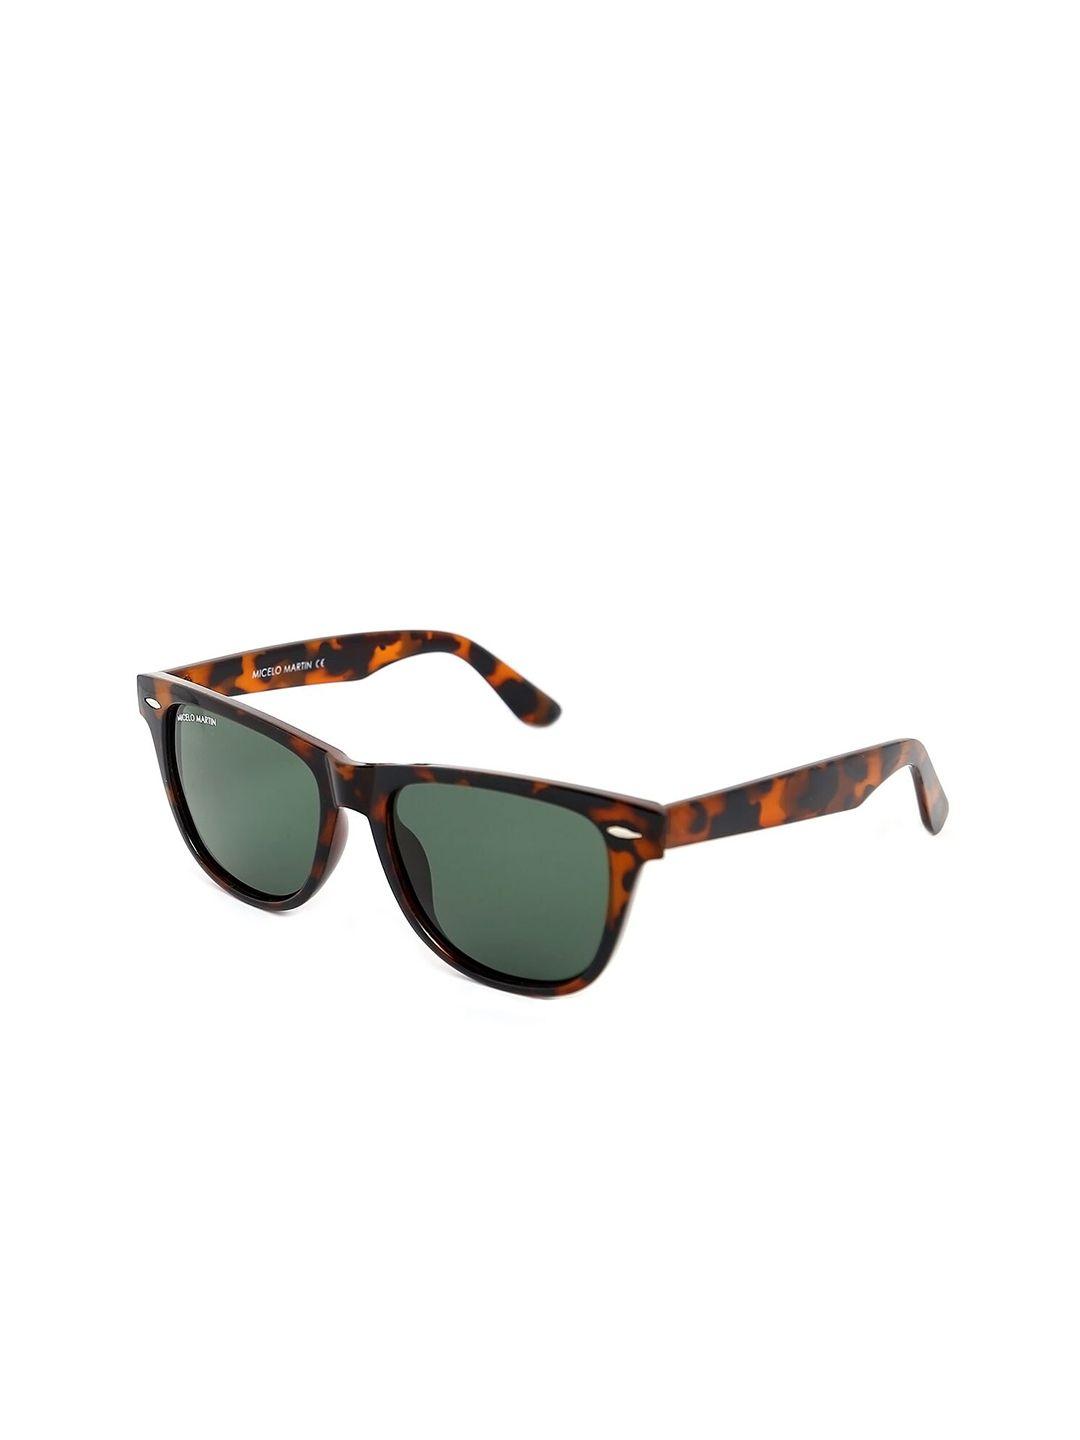 micelo martin unisex green lens & brown wayfarer sunglasses mm2001 c7